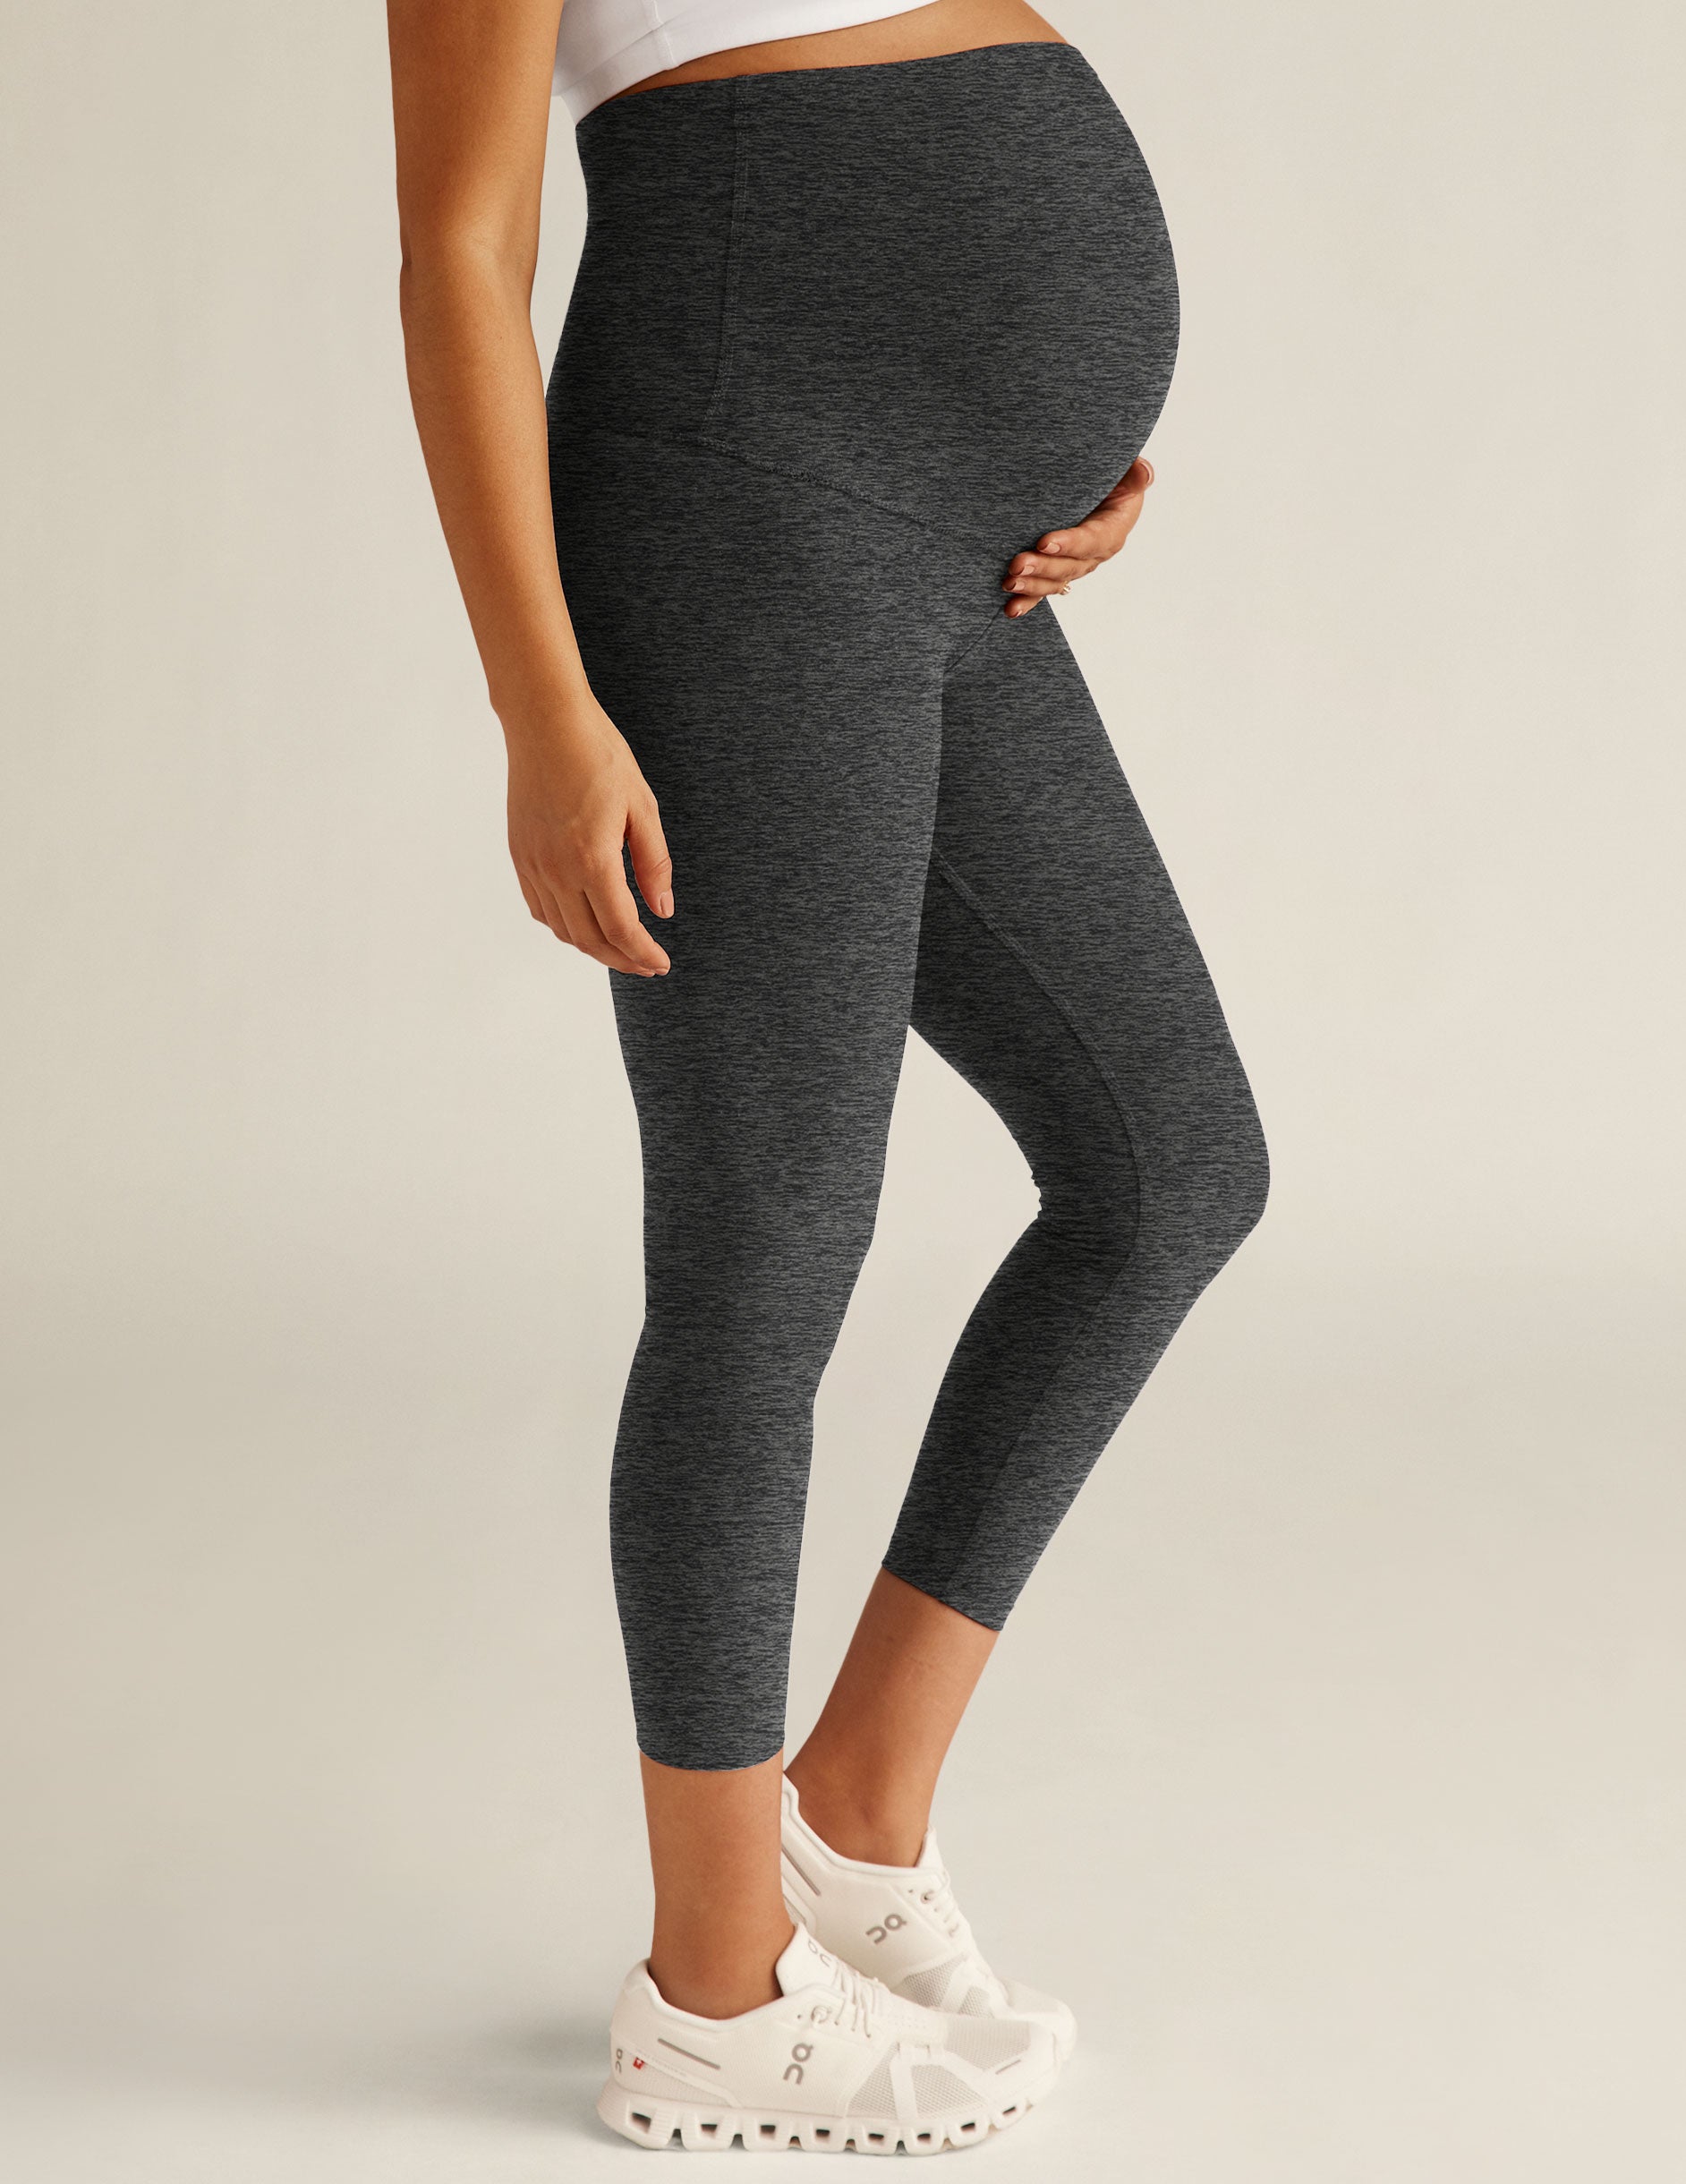 black-charcoal capri maternity leggings. 